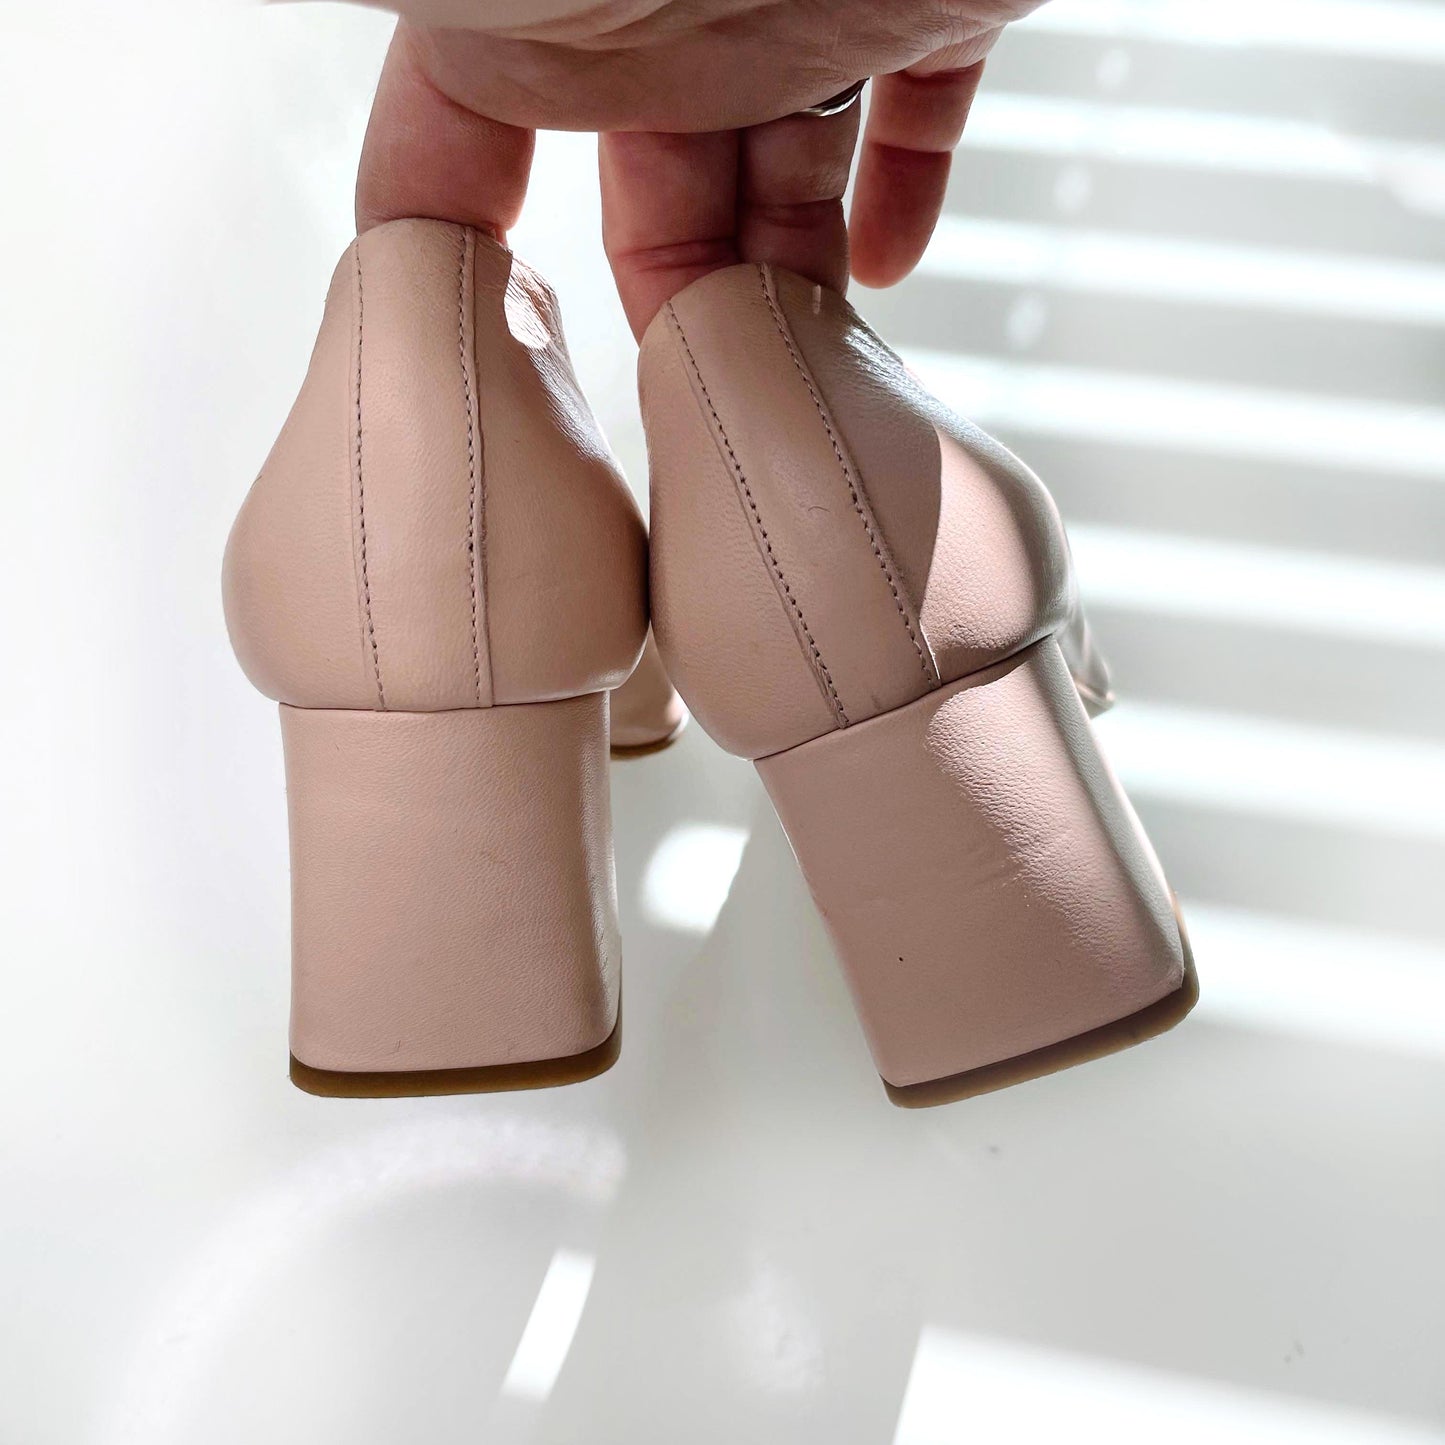 nwot napoleoni pink leather chain day heel - size 39